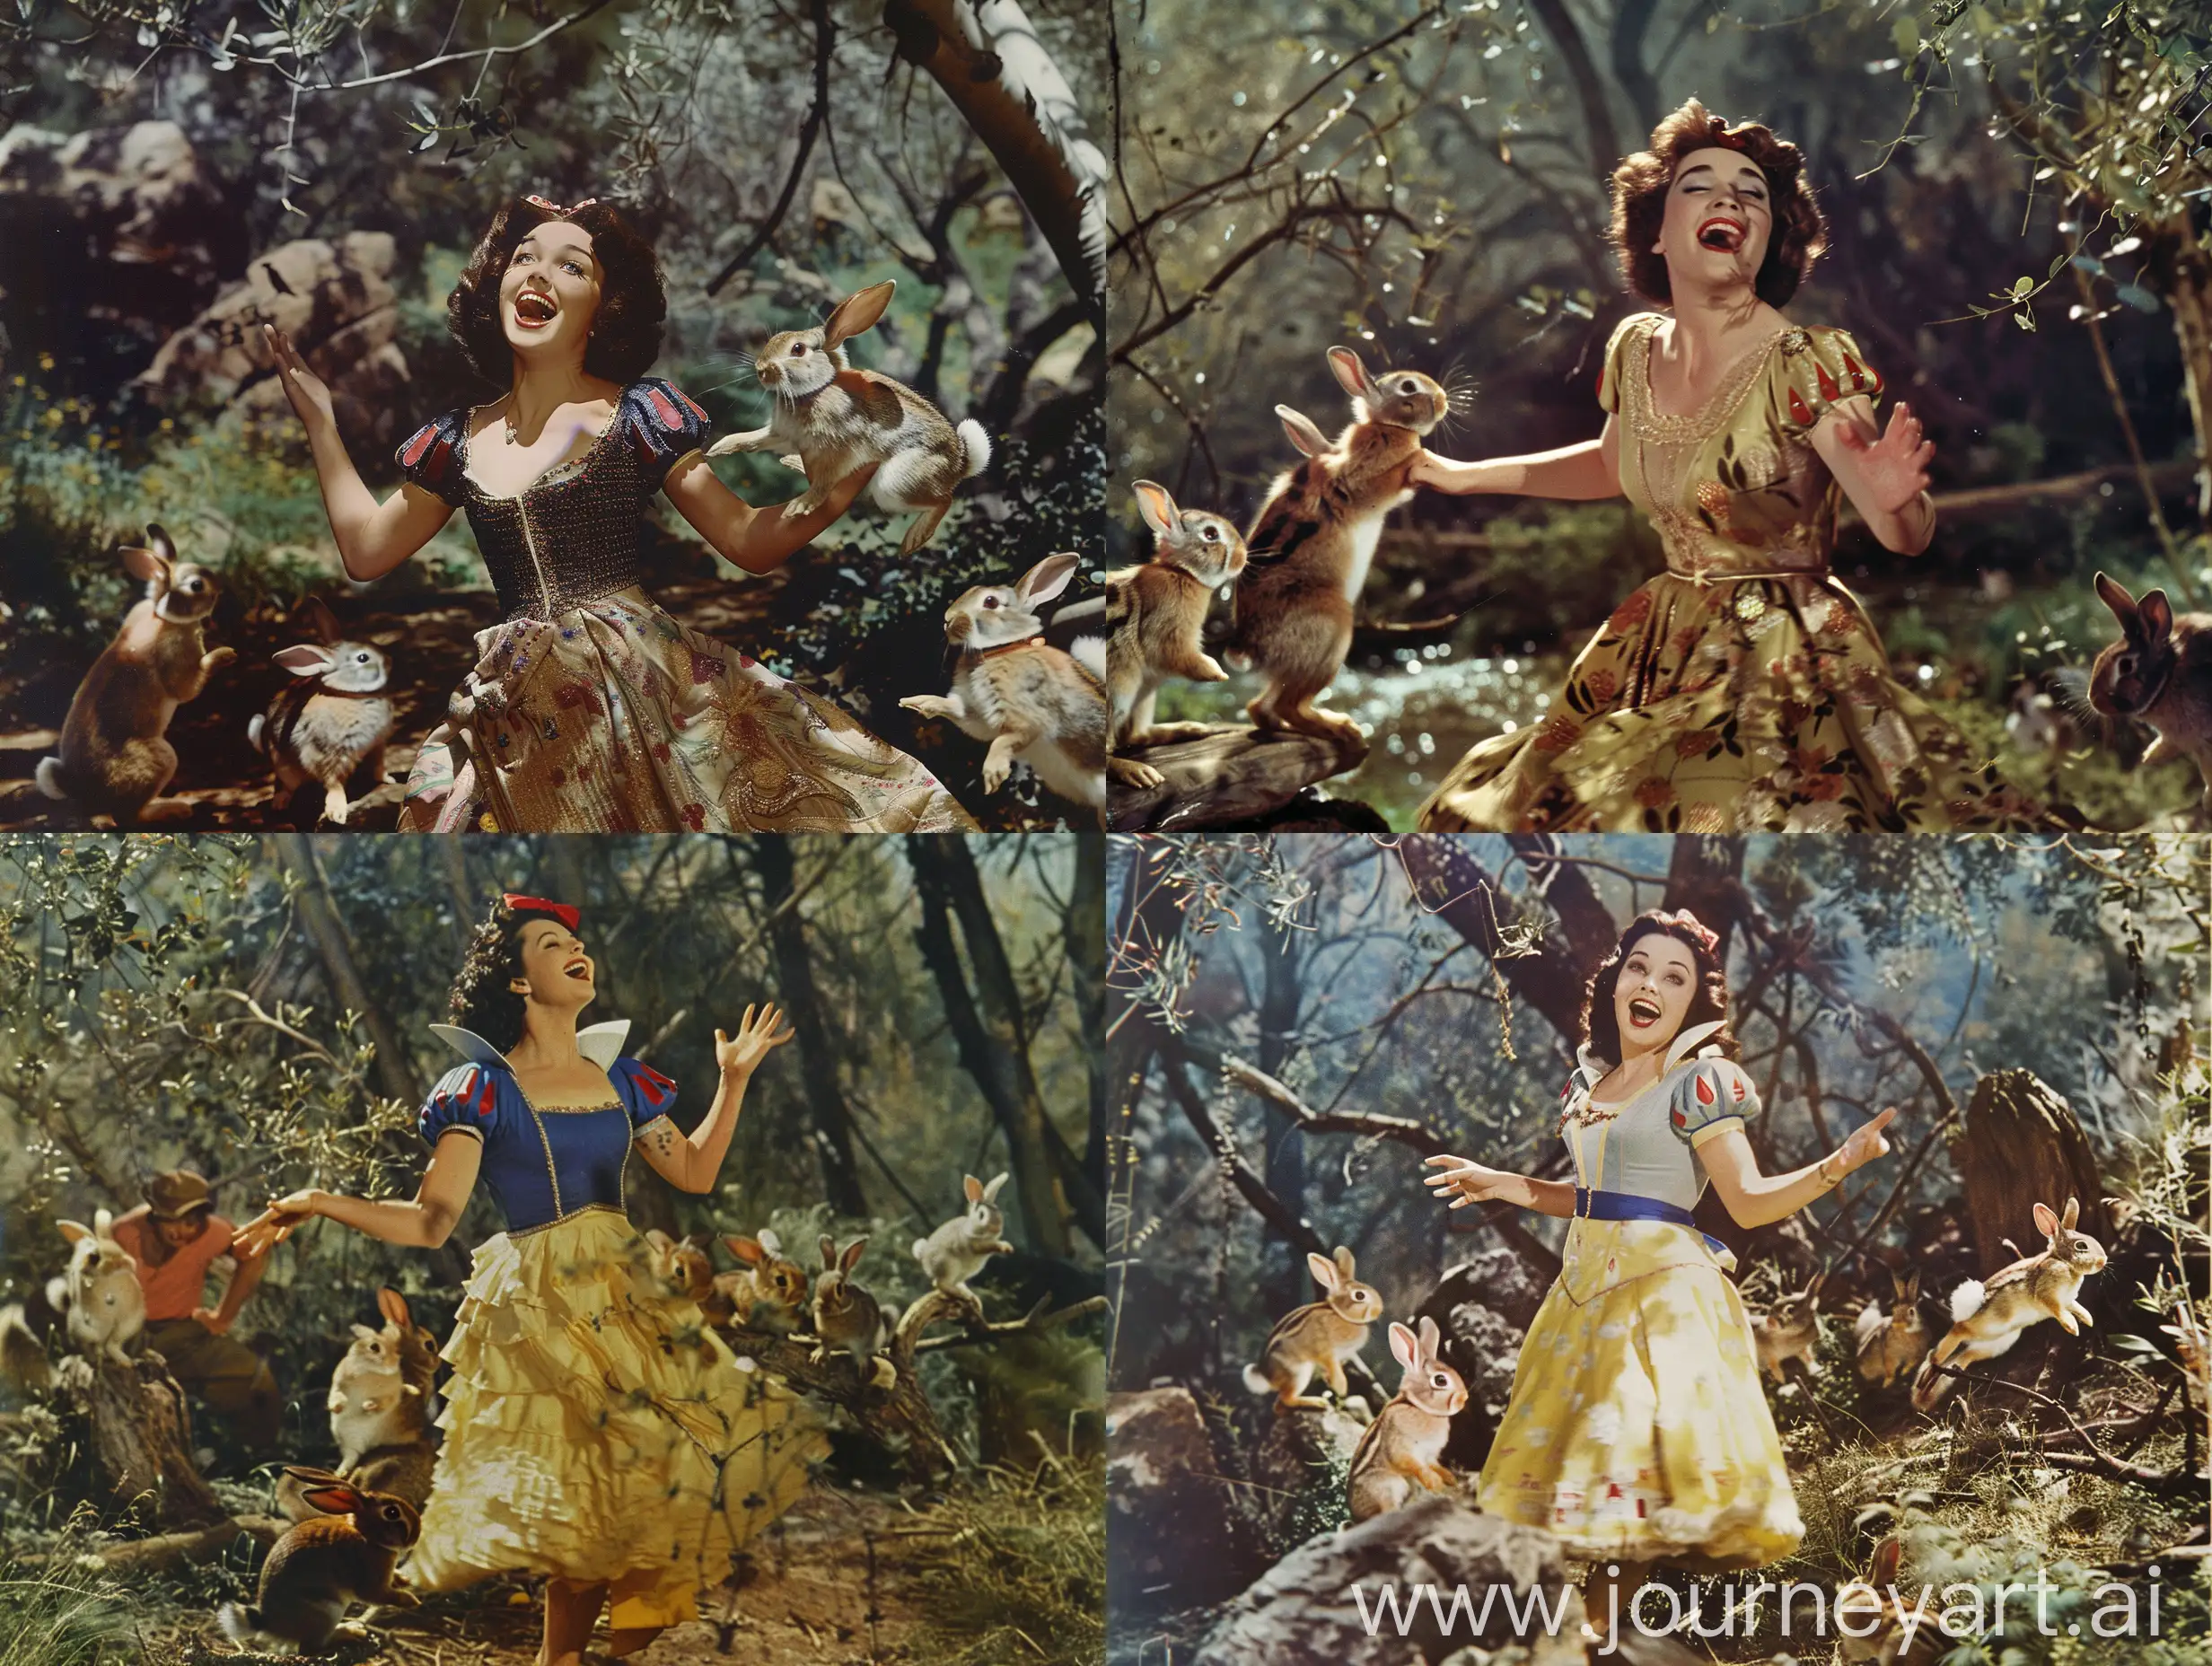 Elizabeth-Taylor-as-Joyful-Snow-White-Dancing-in-Vintage-Forest-Scene